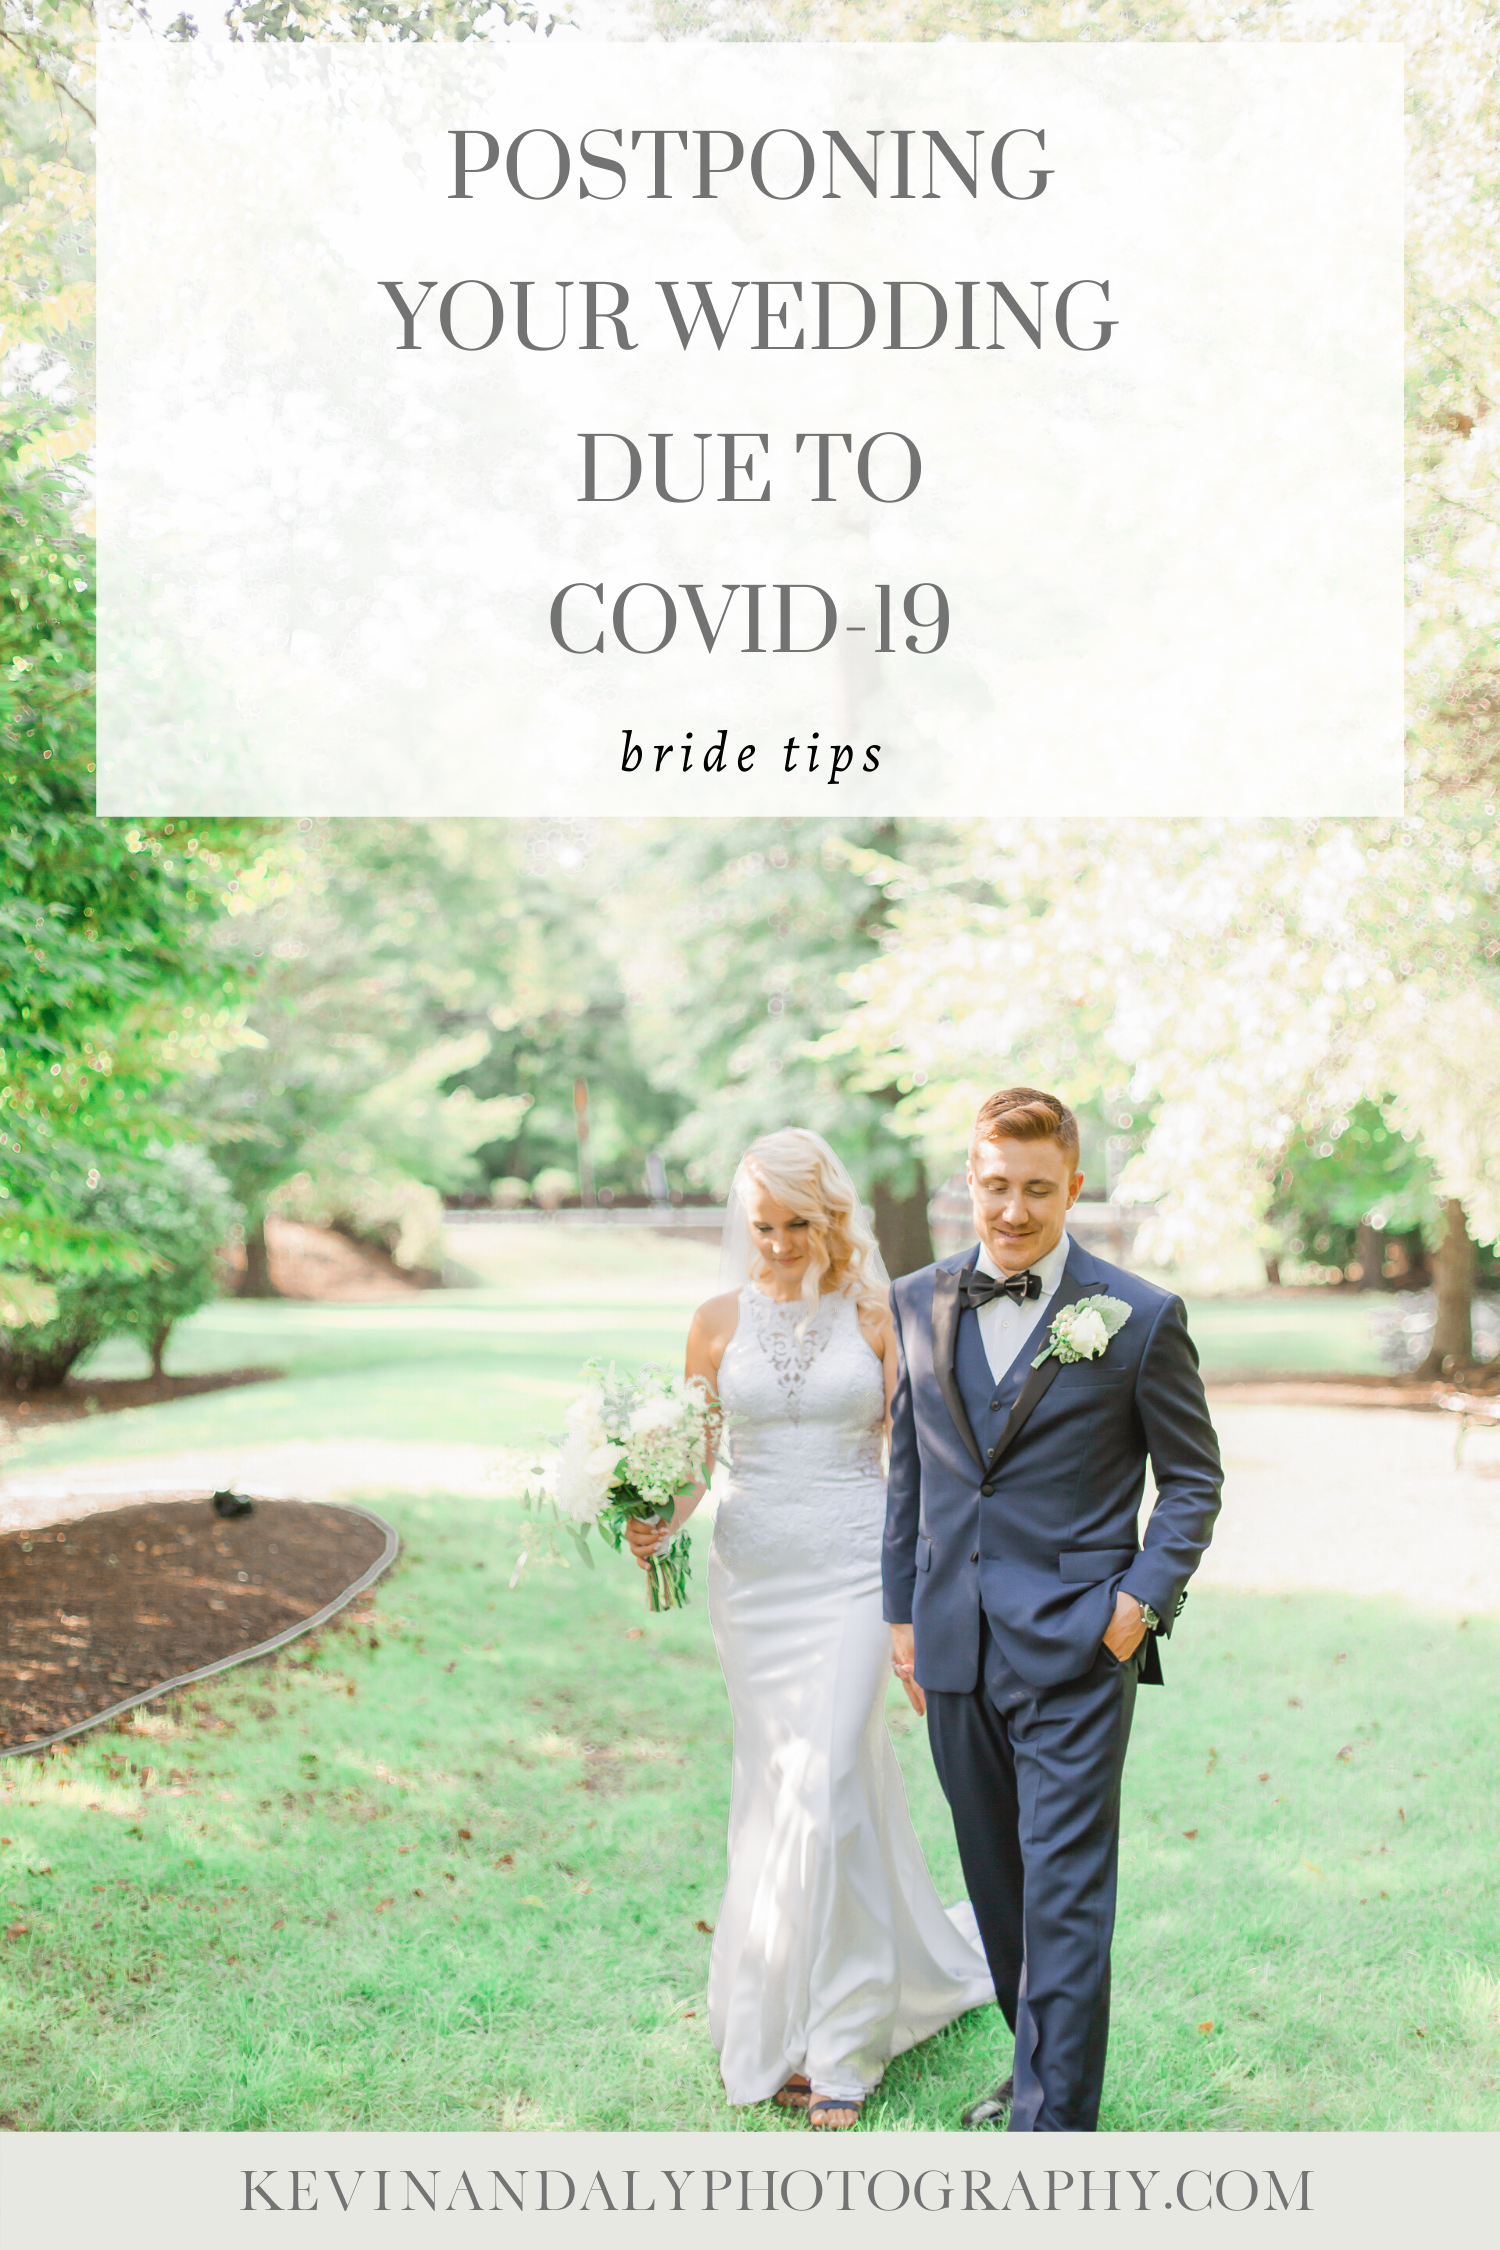 blog on postponing a wedding due to coronavirus